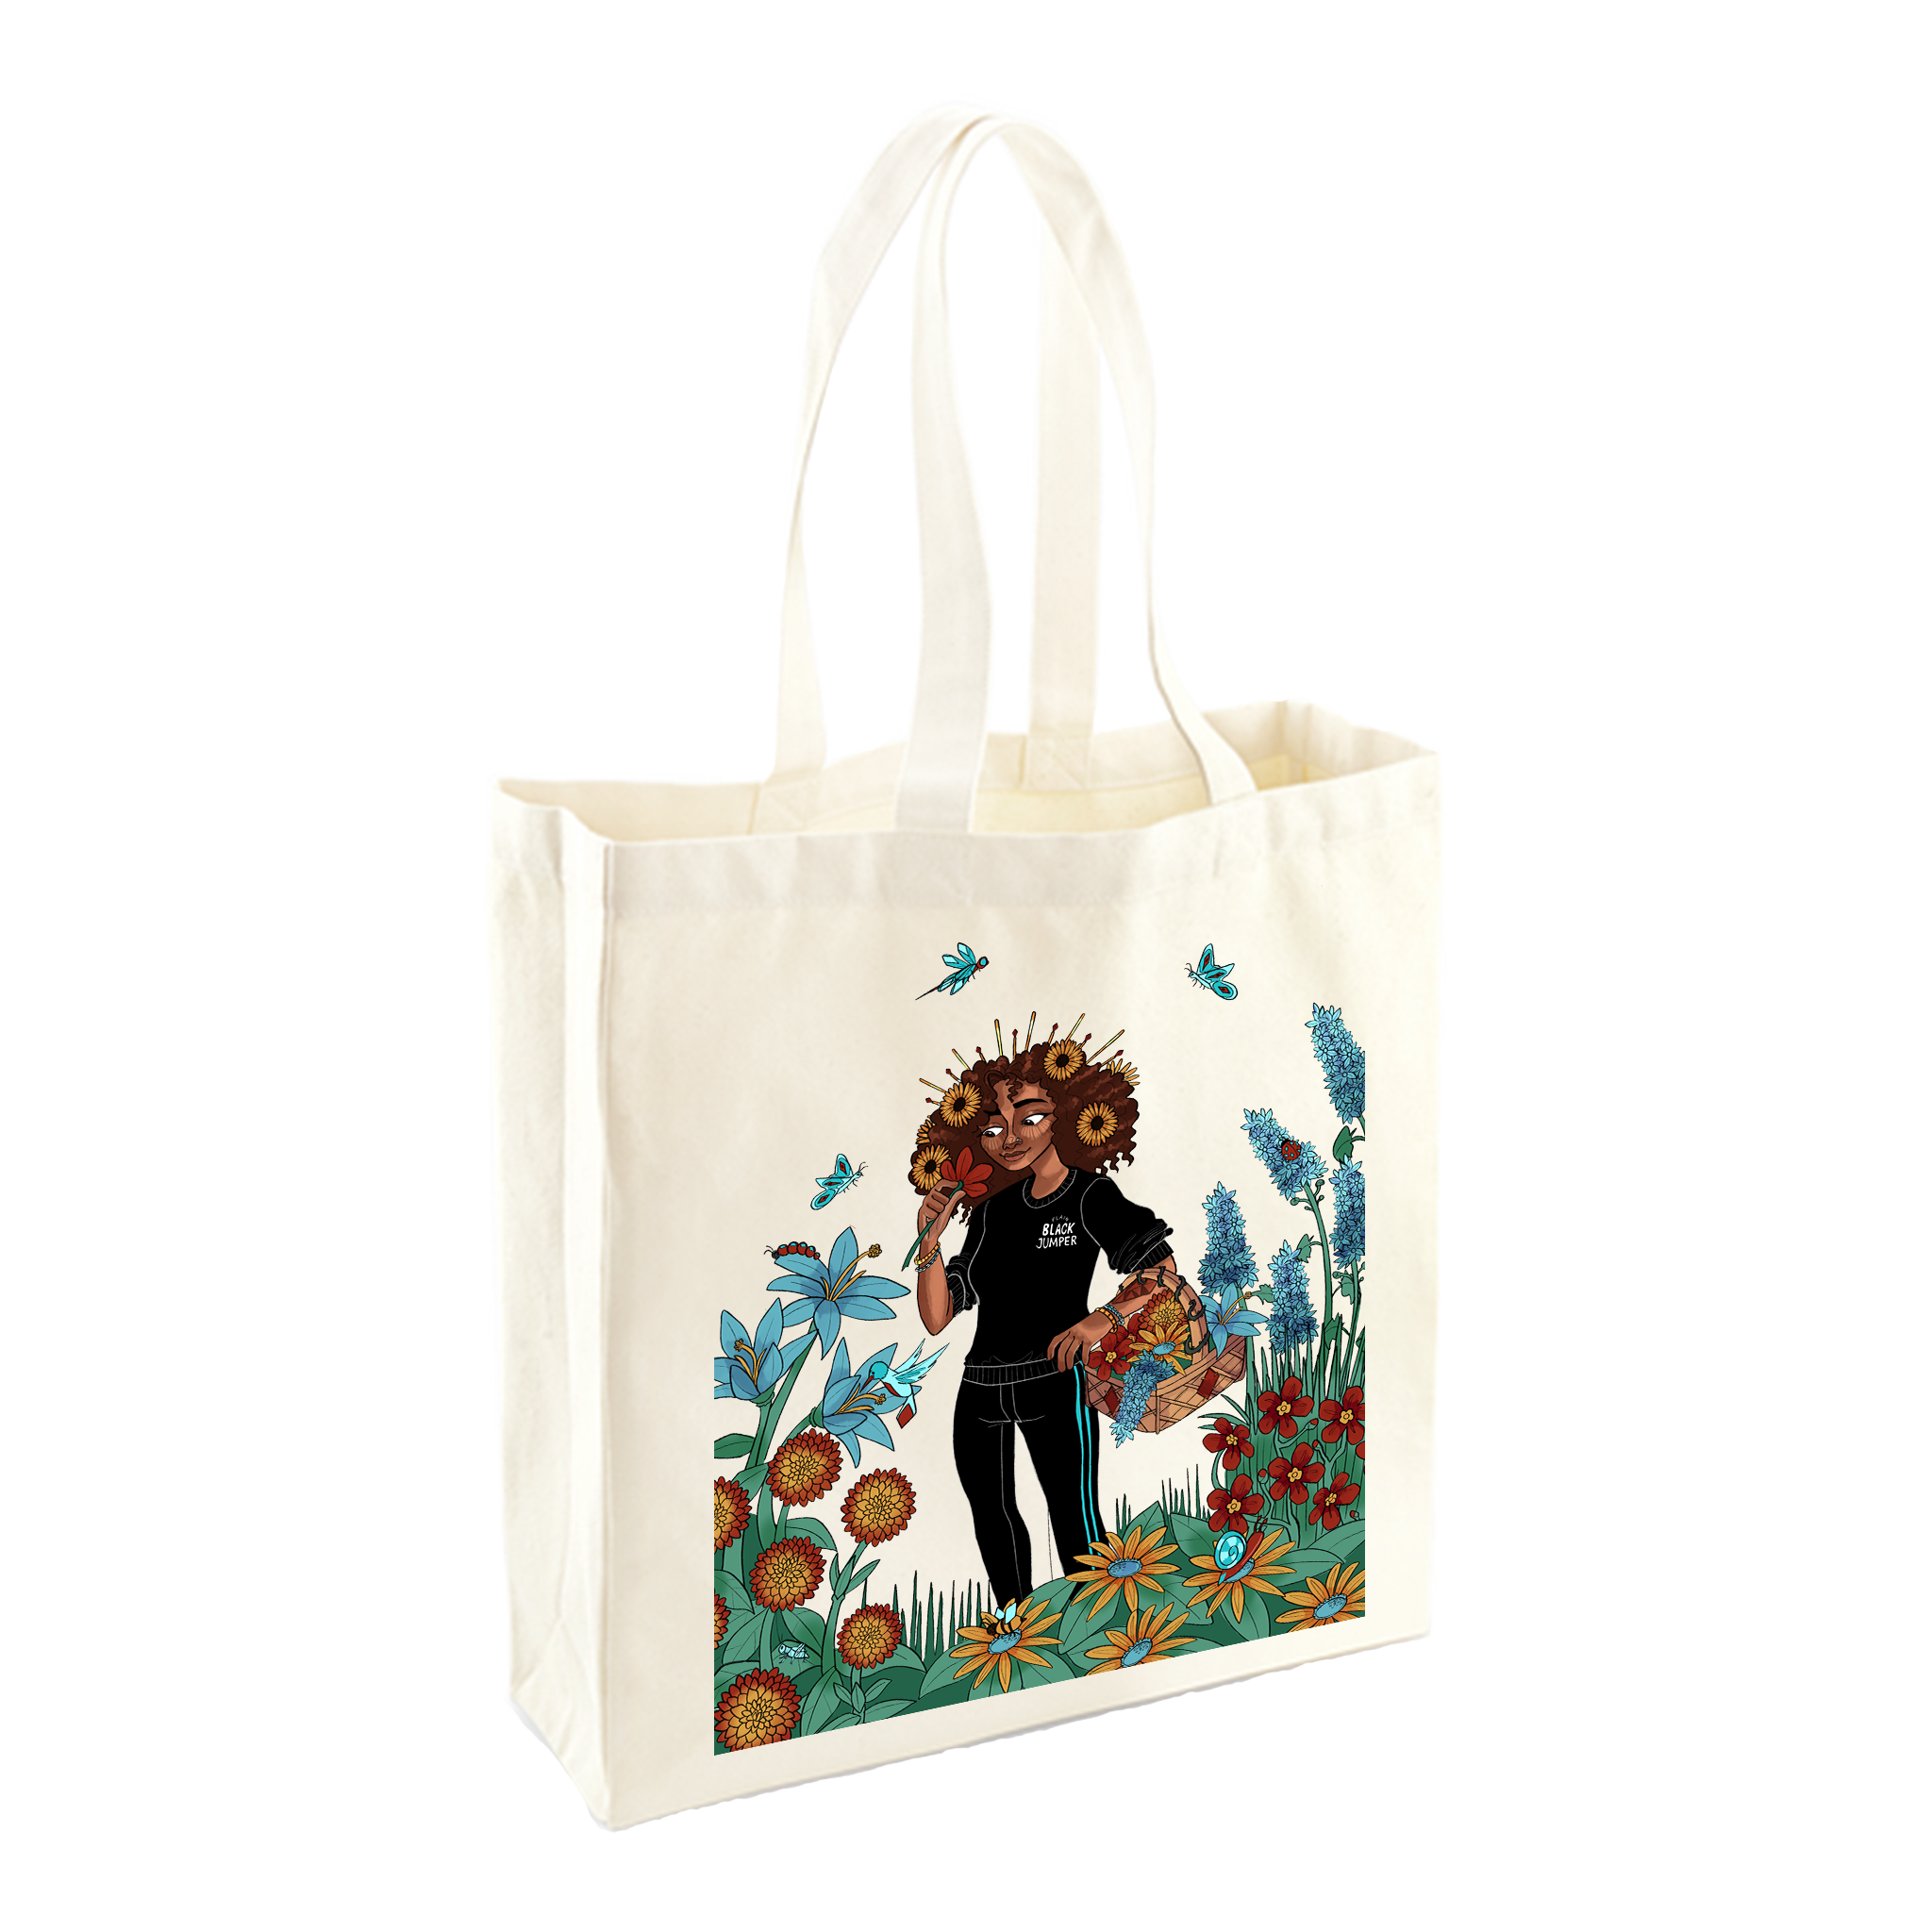 fairtrade cotton, tote bag, flowers, graphic design, durable tote bag, the plain shop